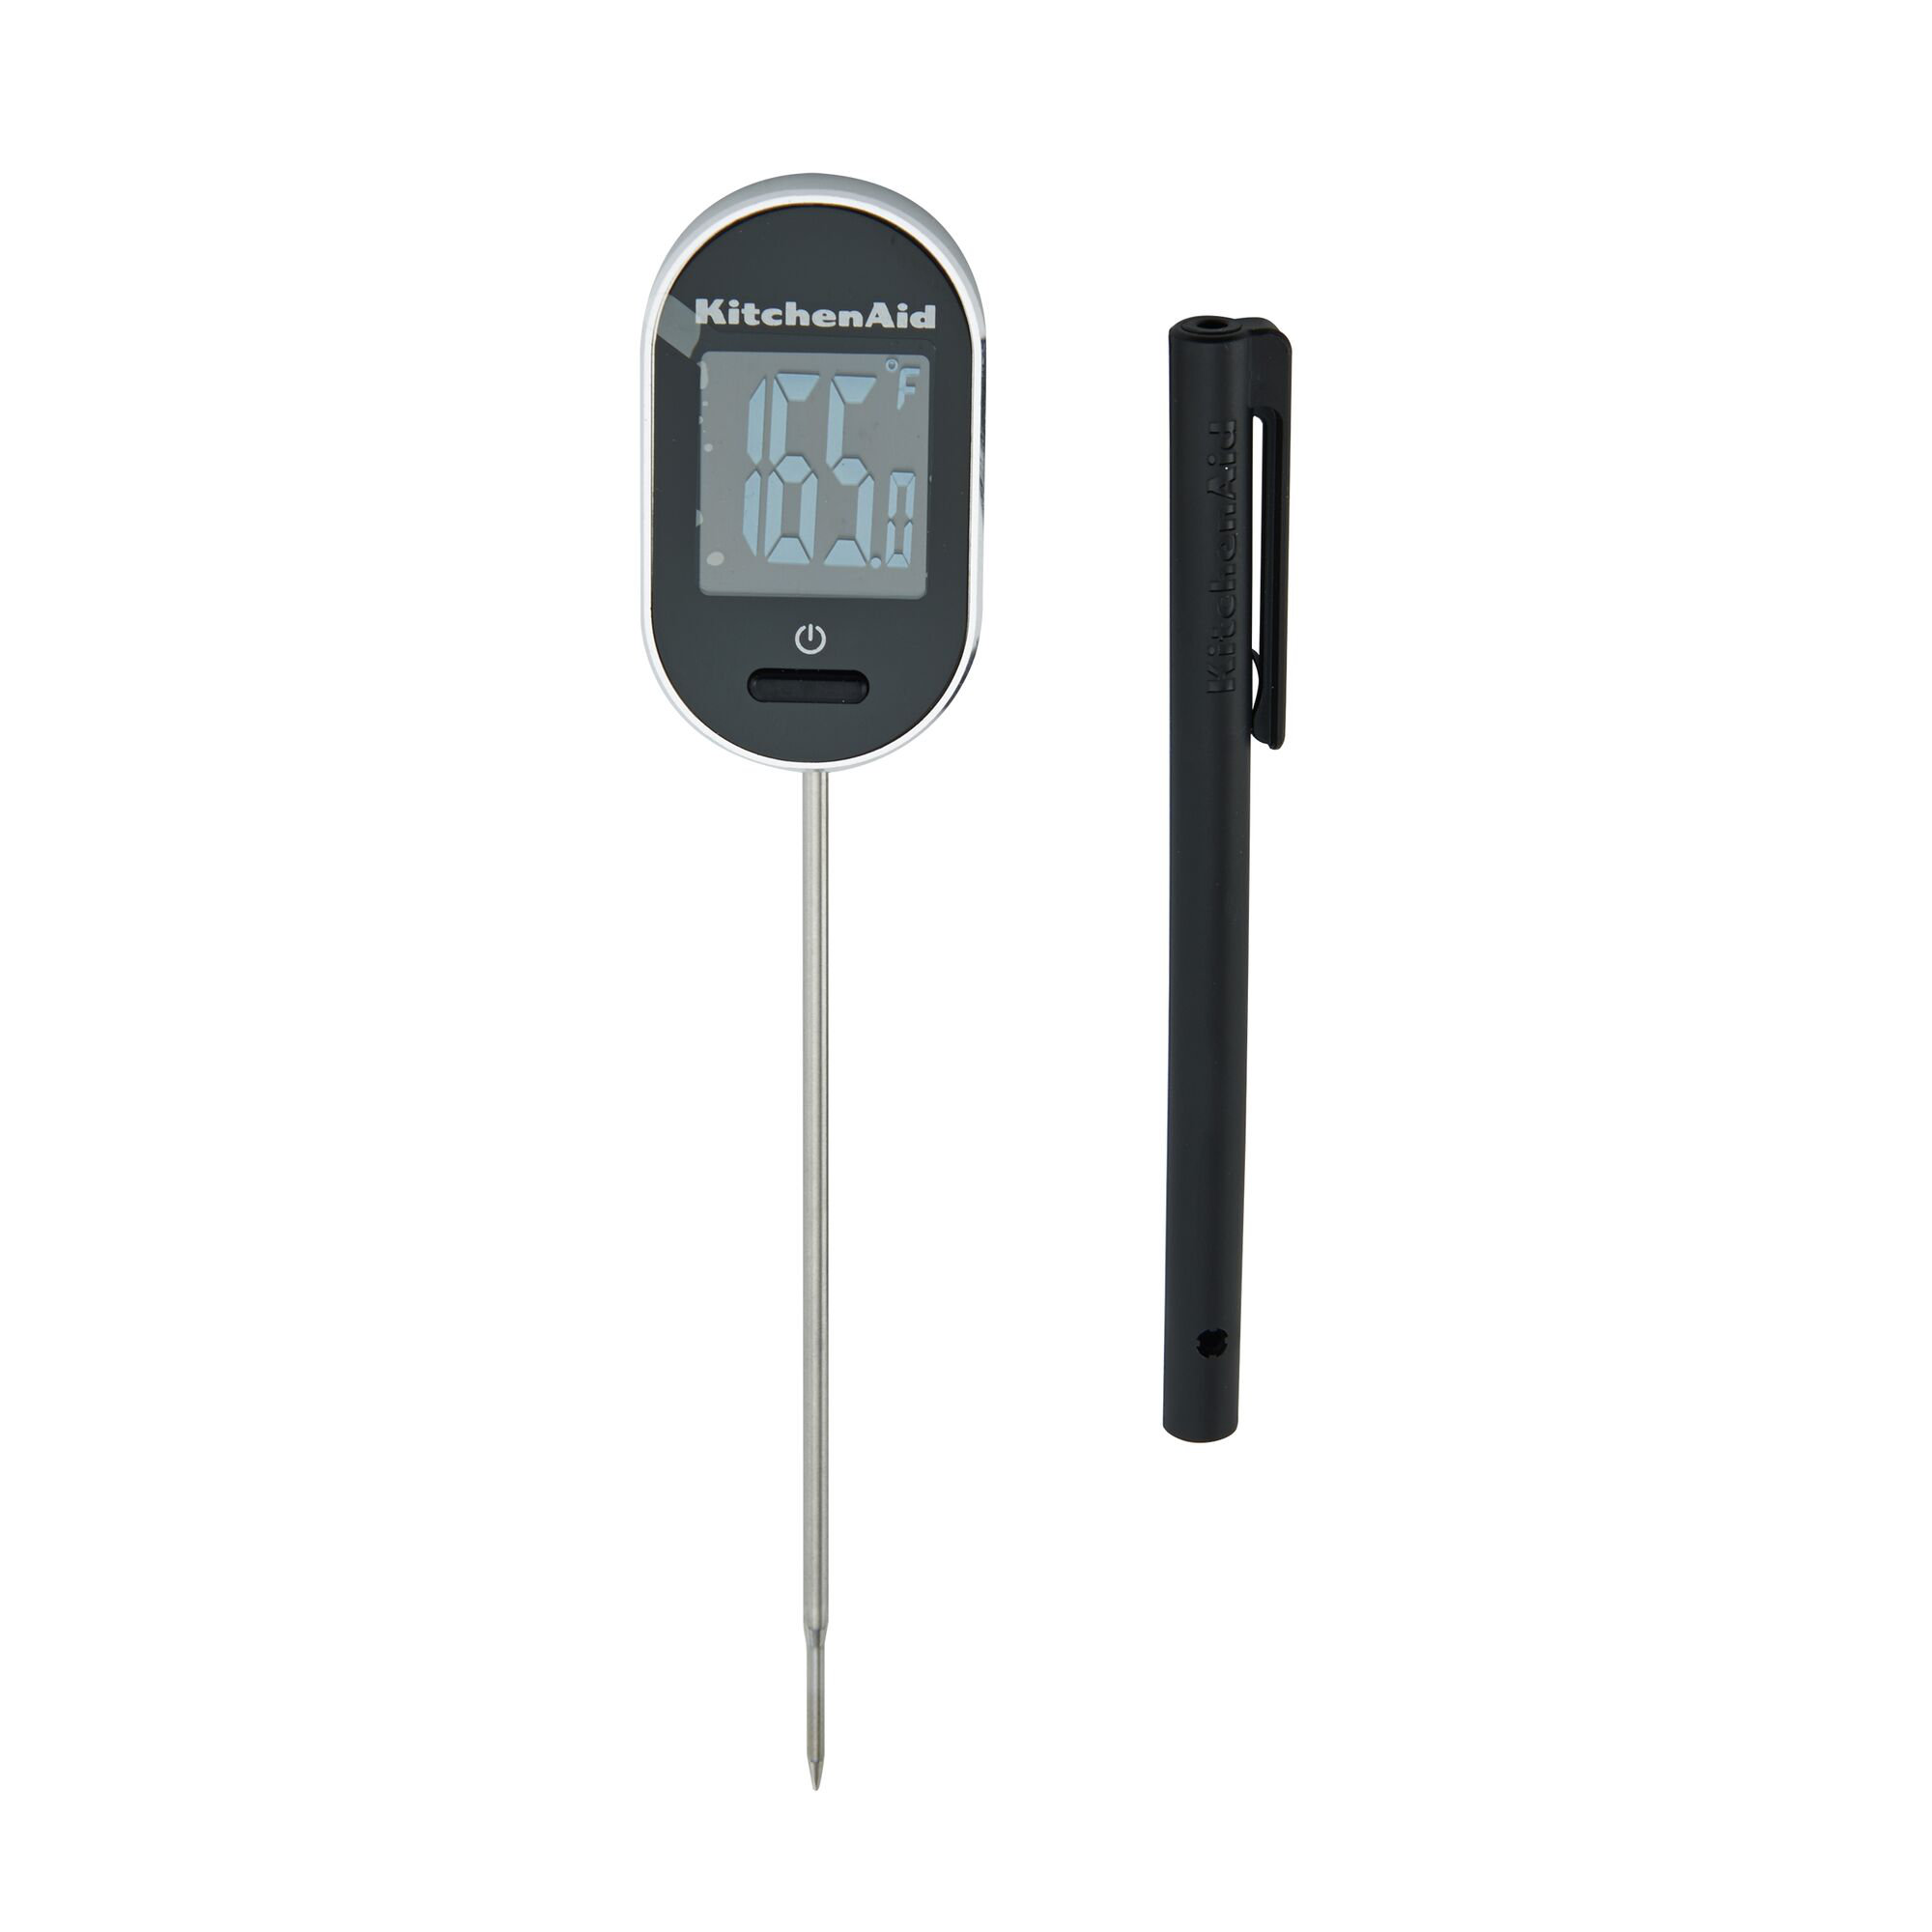 KitchenAid Digital Instant Read Kitchen and Food Thermometer Black